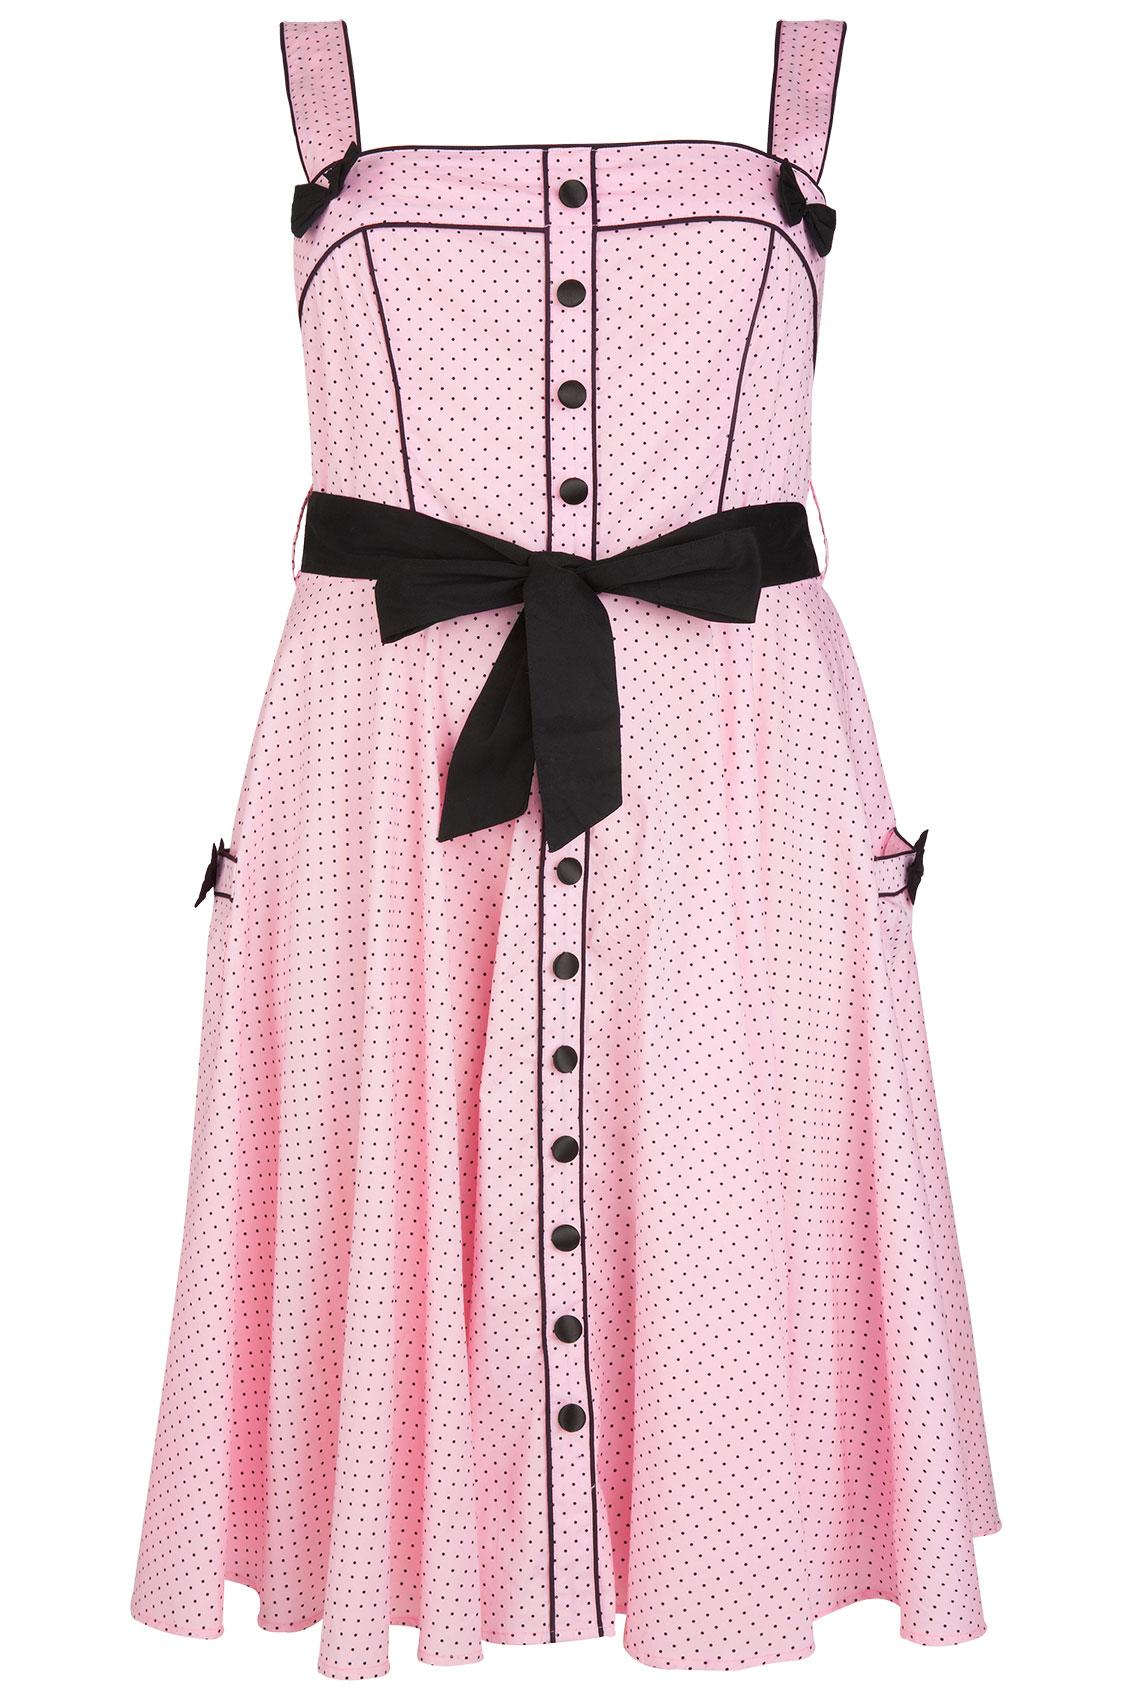 black dress with pink polka dots